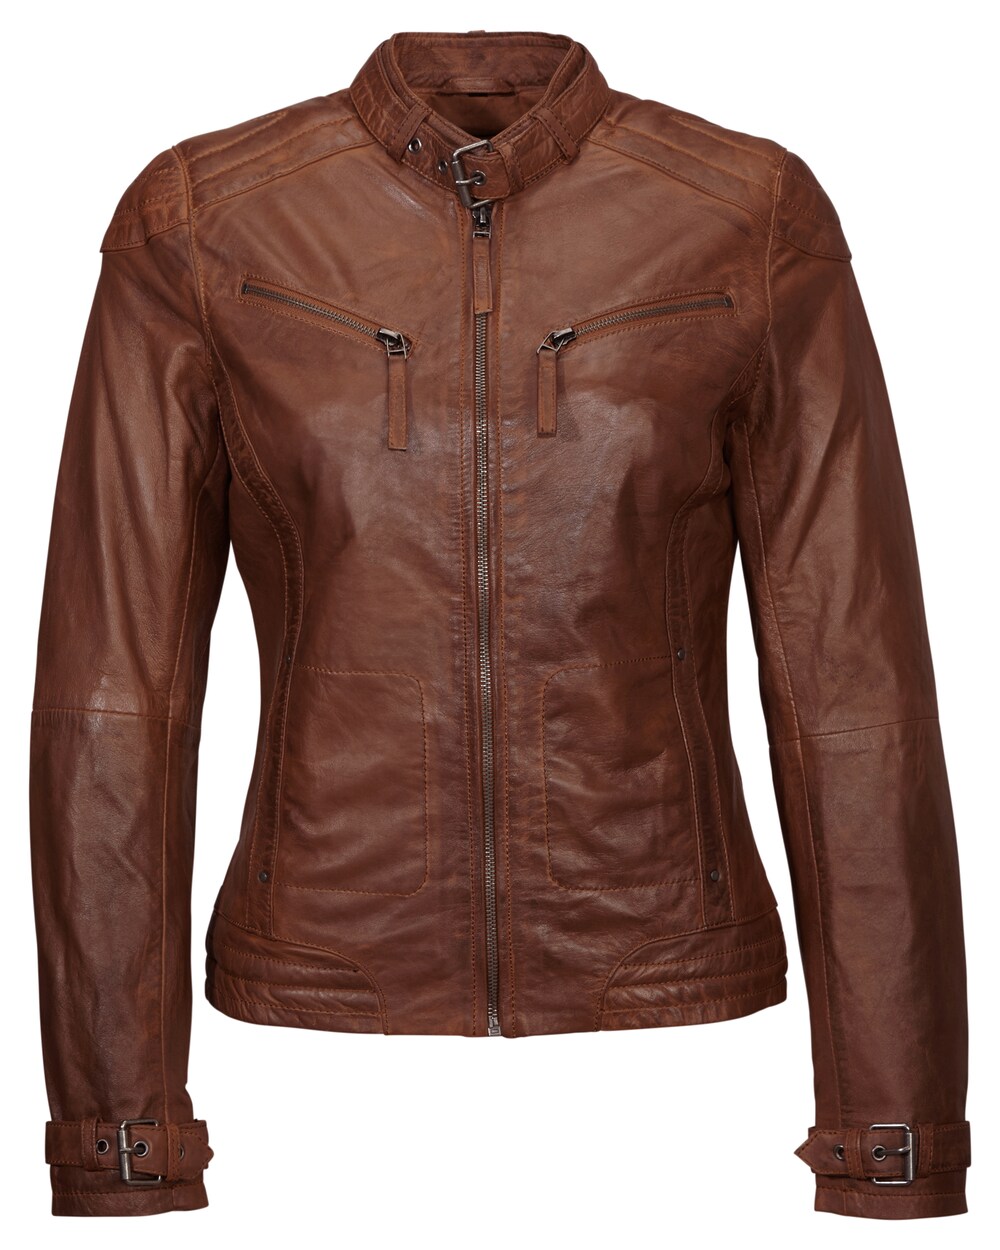 Межсезонная куртка MUSTANG Ryana, коричневый межсезонная куртка mustang ryana коричневый